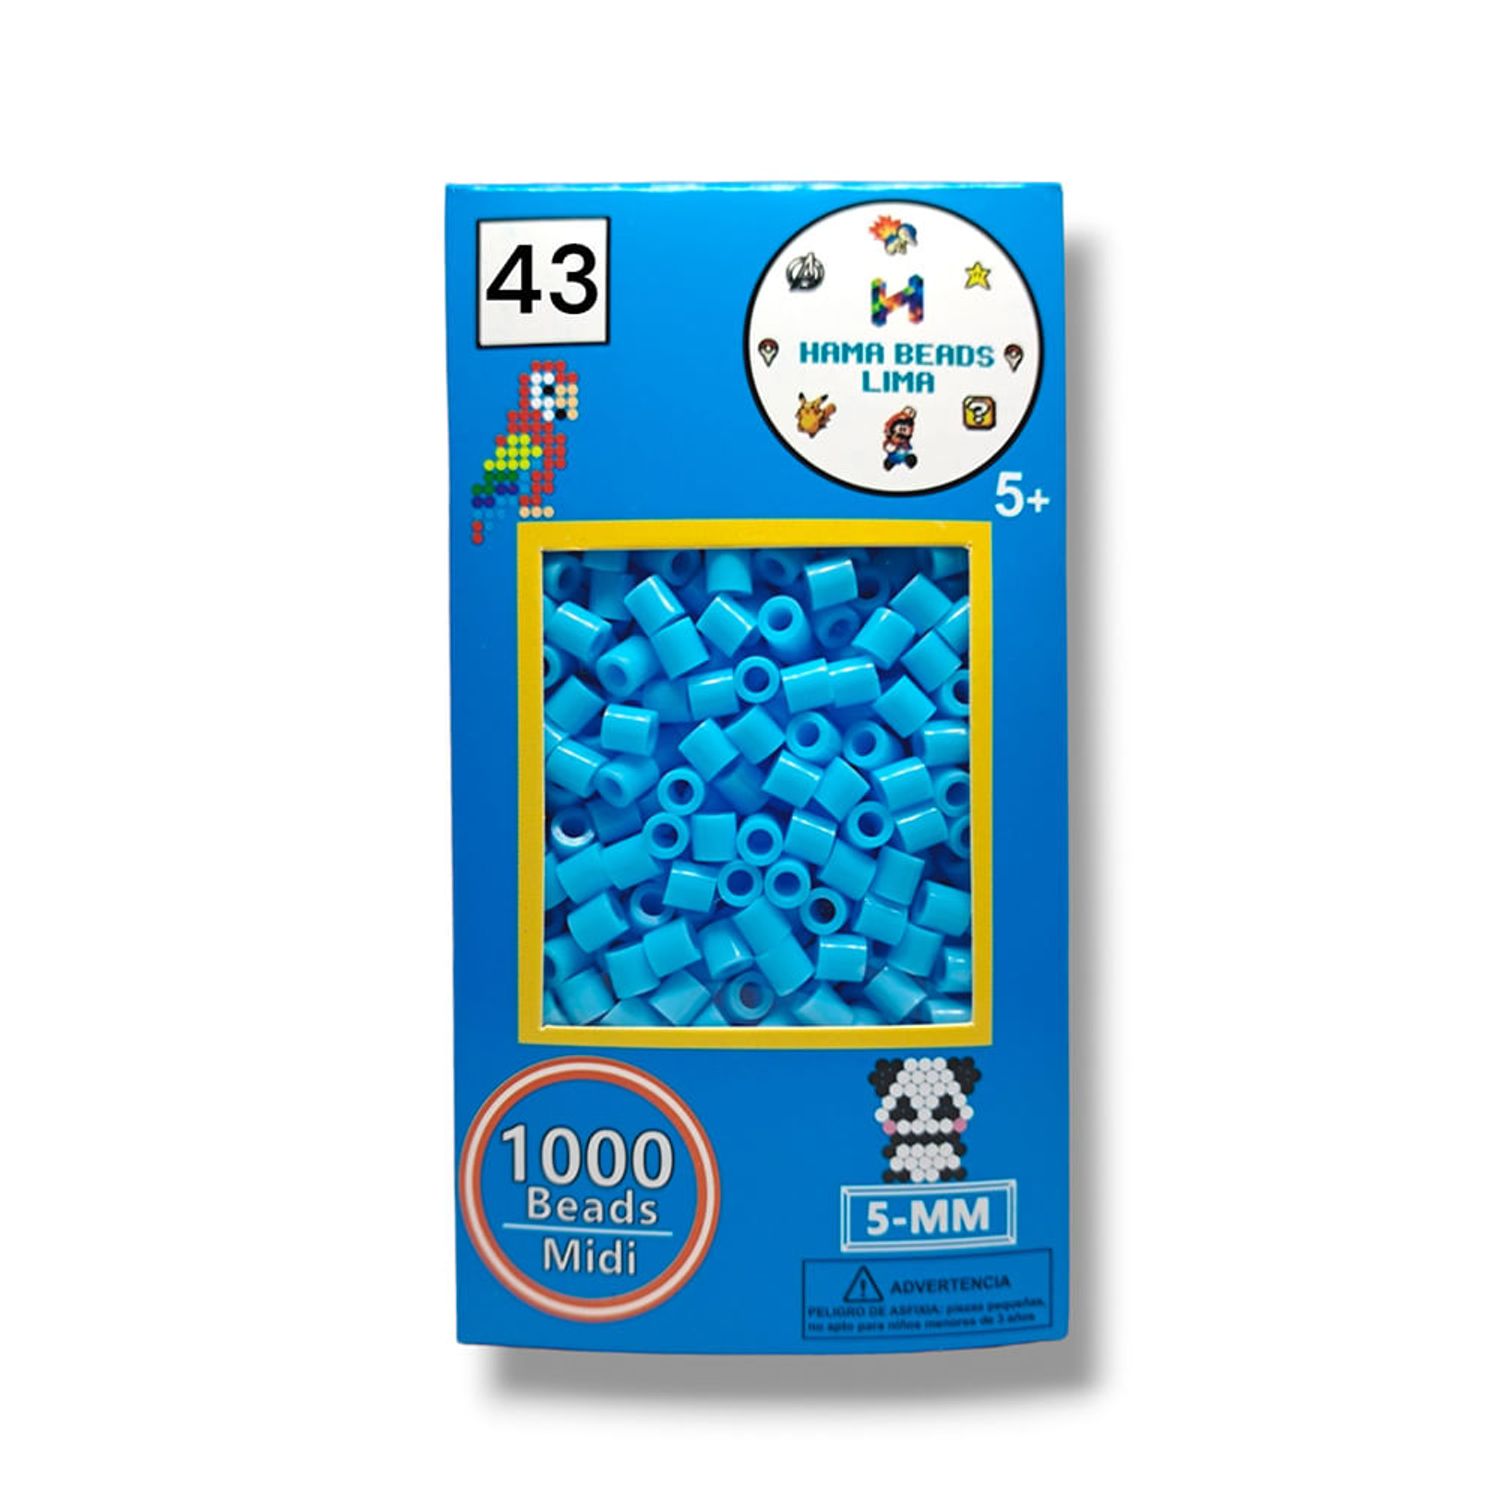 Hama Beads Paquete de 1000 Unidades Midi 5mm I Oechsle - Oechsle